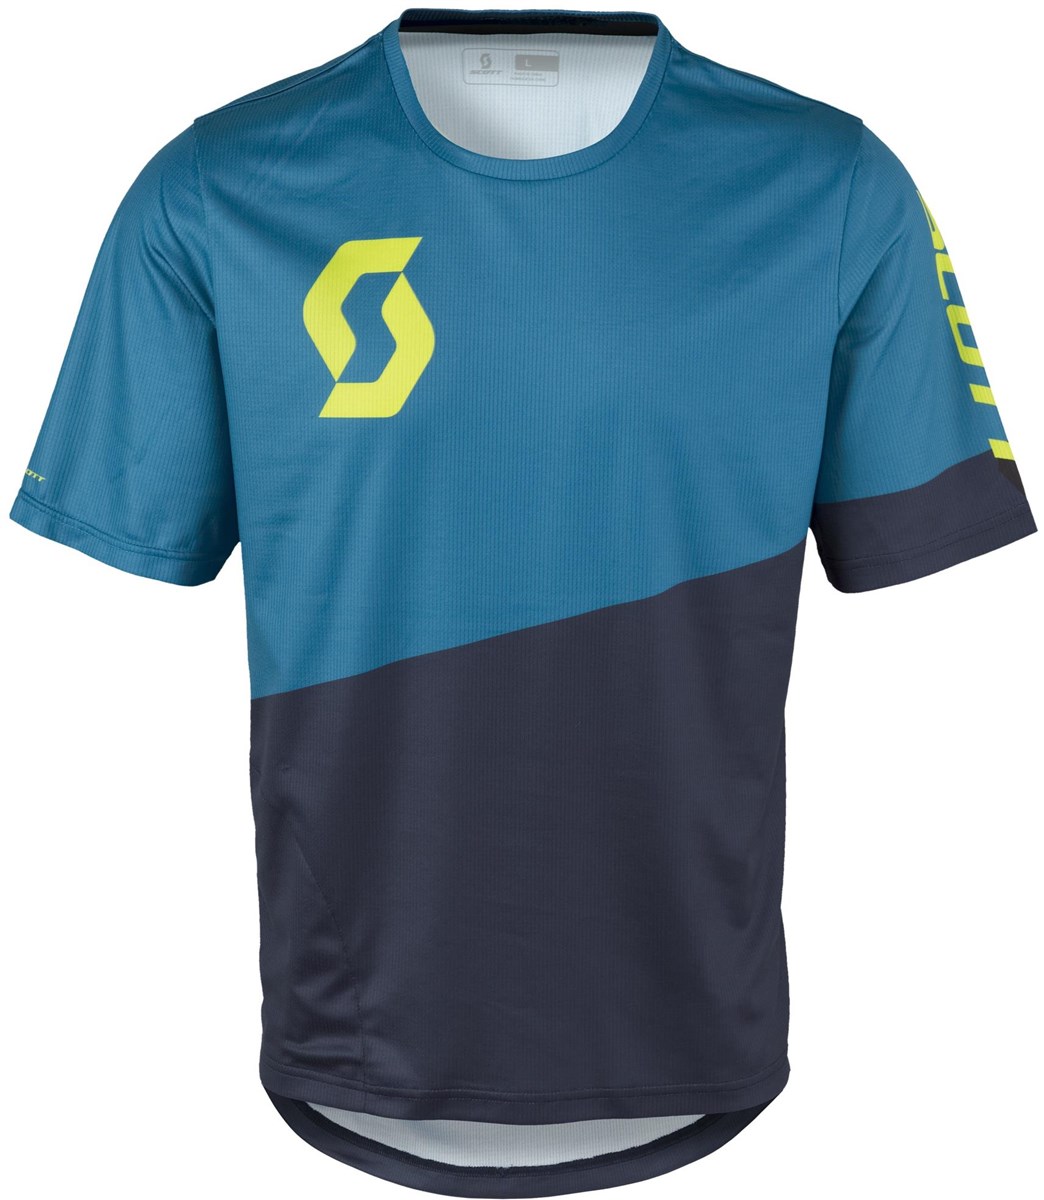 Scott Progressive Pro Short Sleeve Cycling Jersey product image